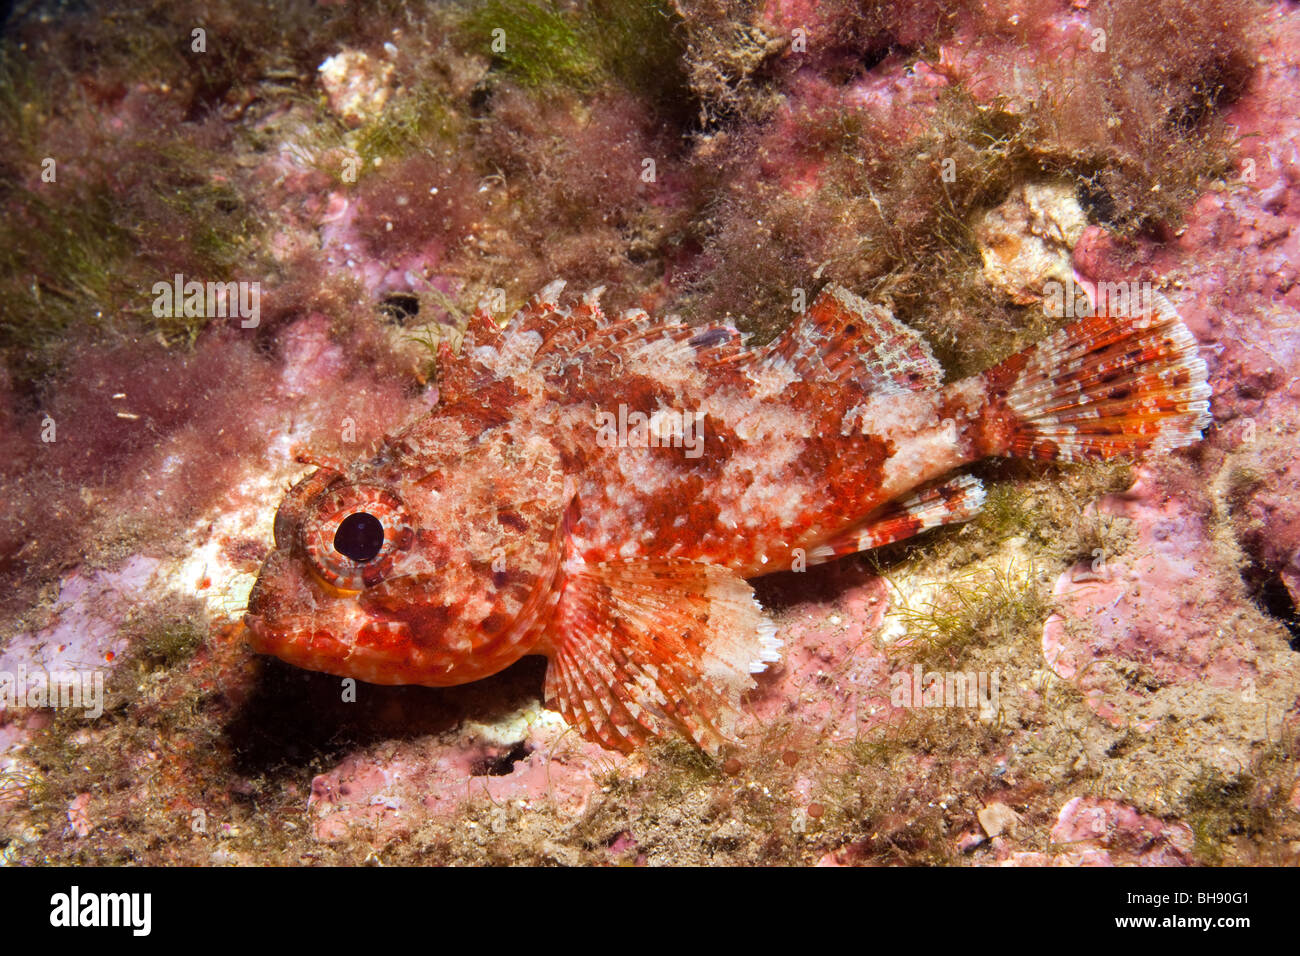 Small Rockfish, Scorpaena notata, Les Ferranelles, Medes Islands, Costa Brava, Mediterranean Sea, Spain Stock Photo